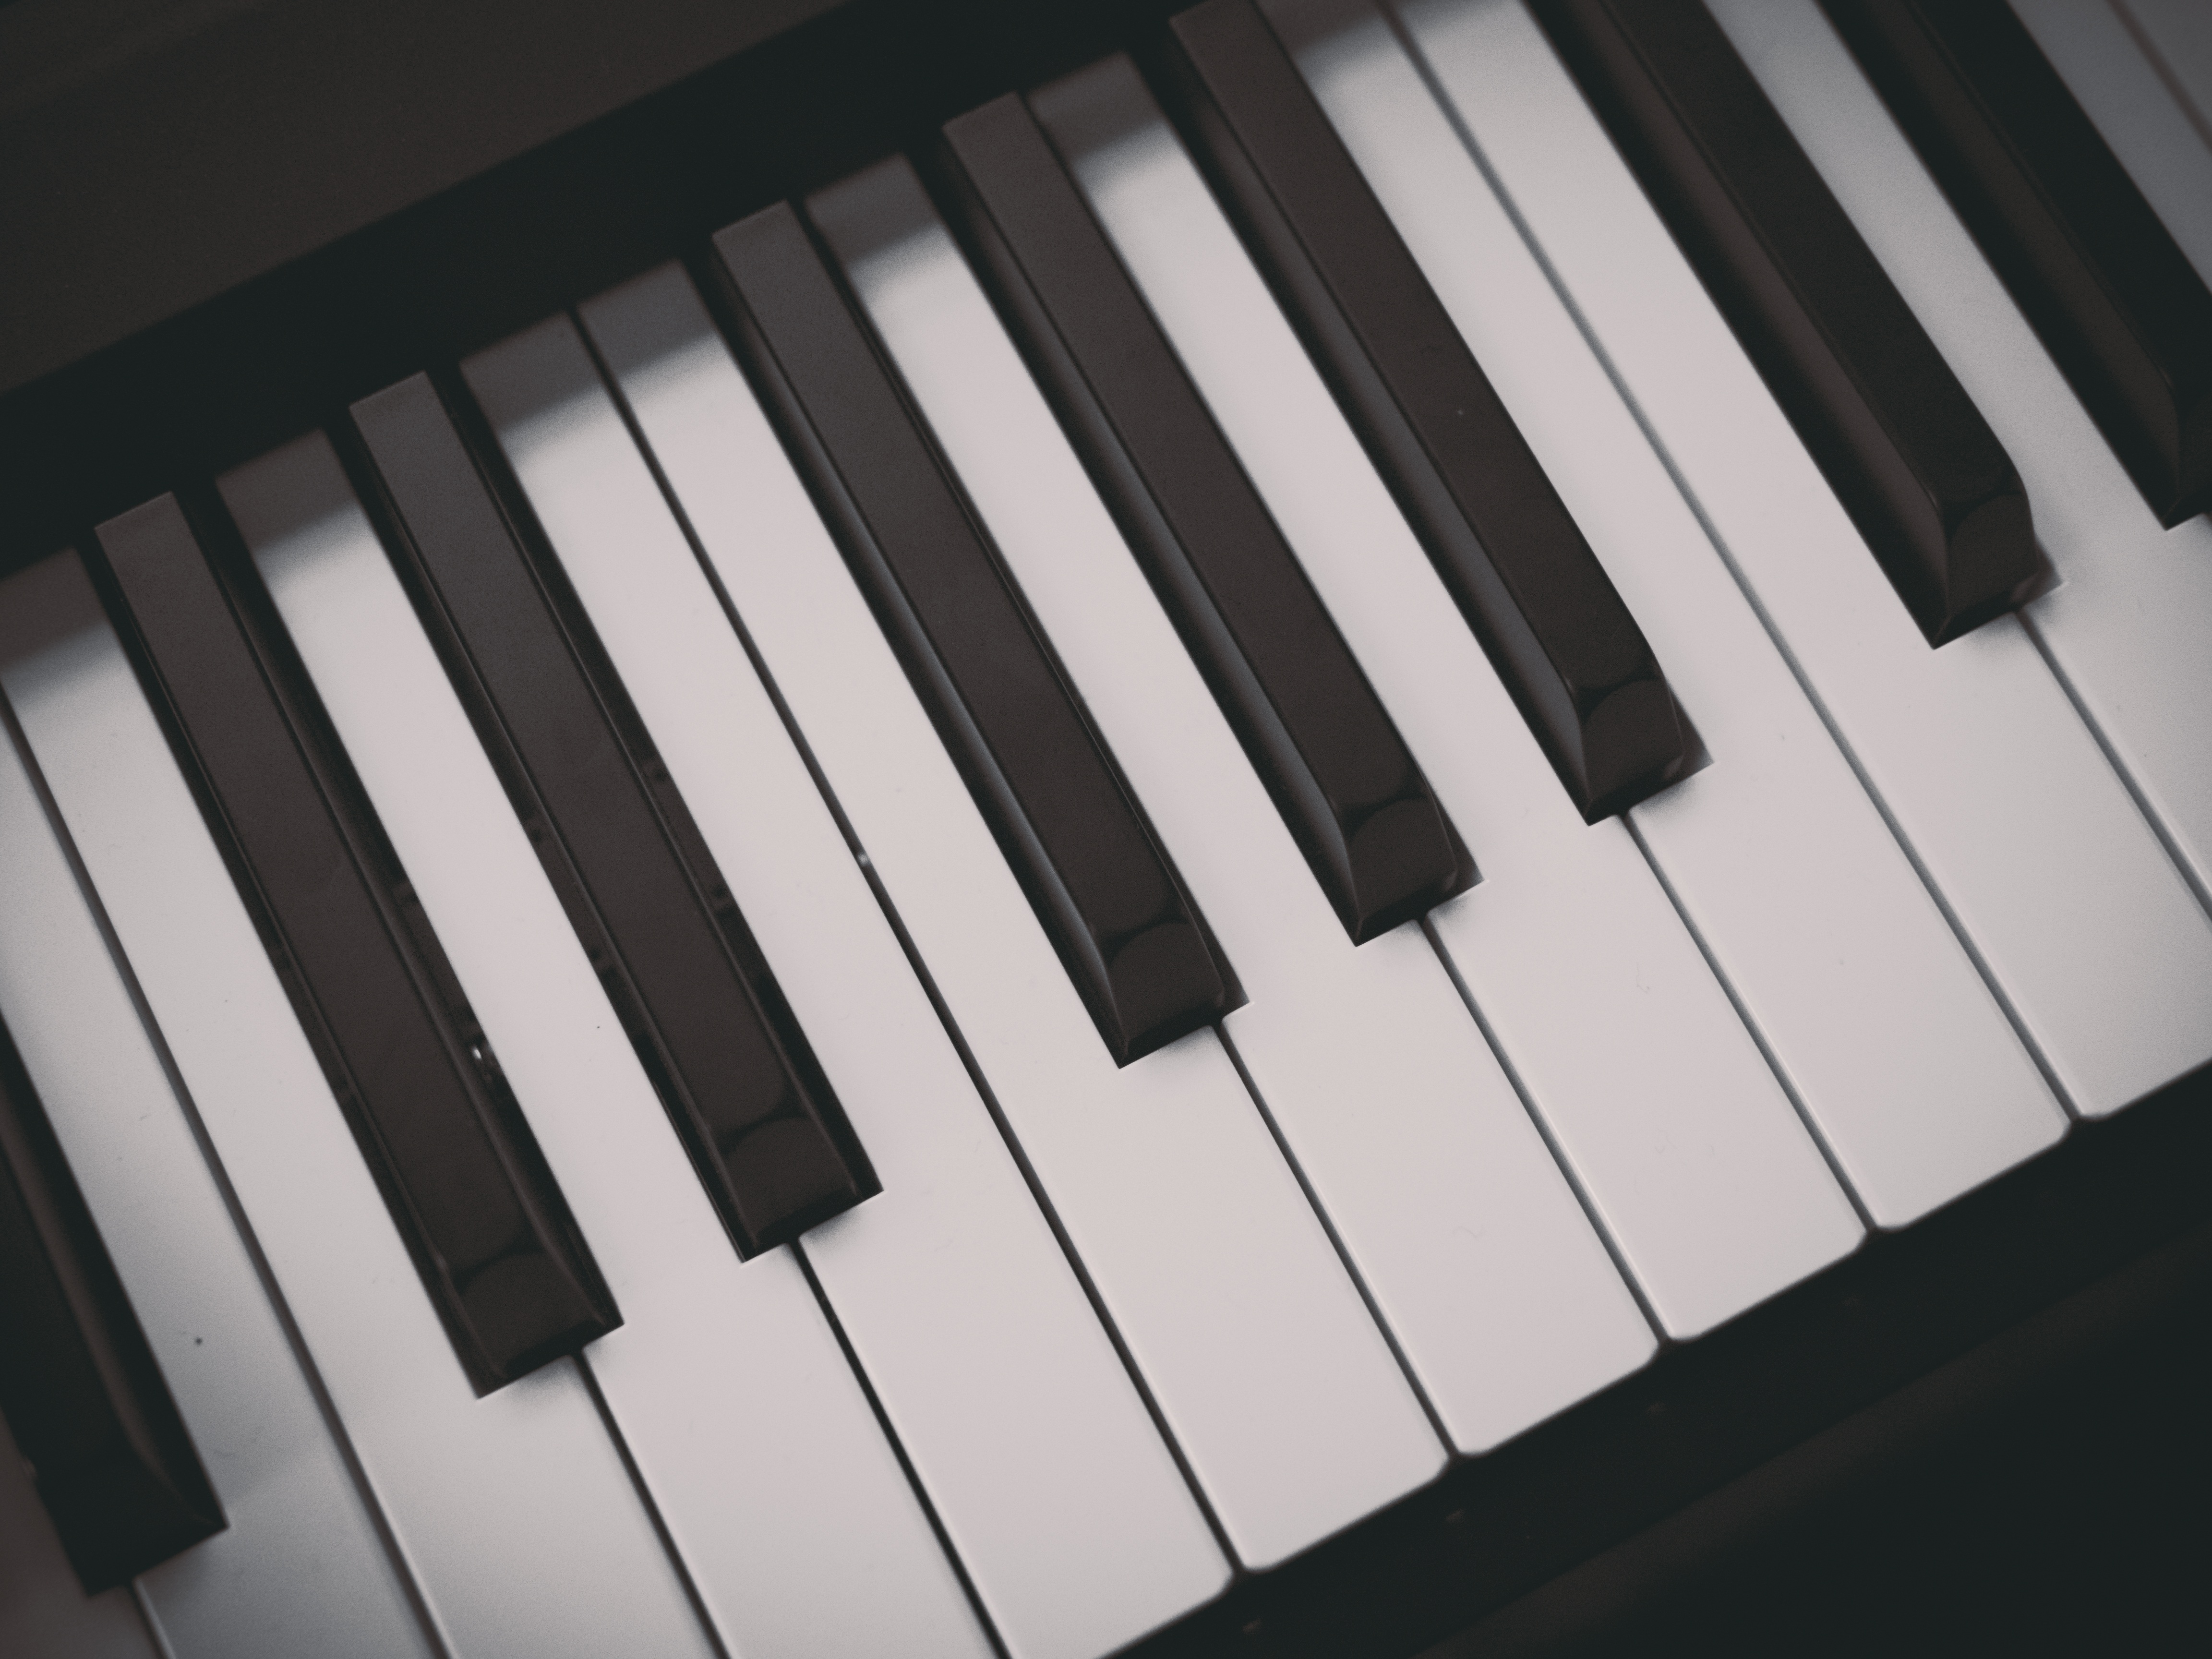 piano, music, musical instrument, keys